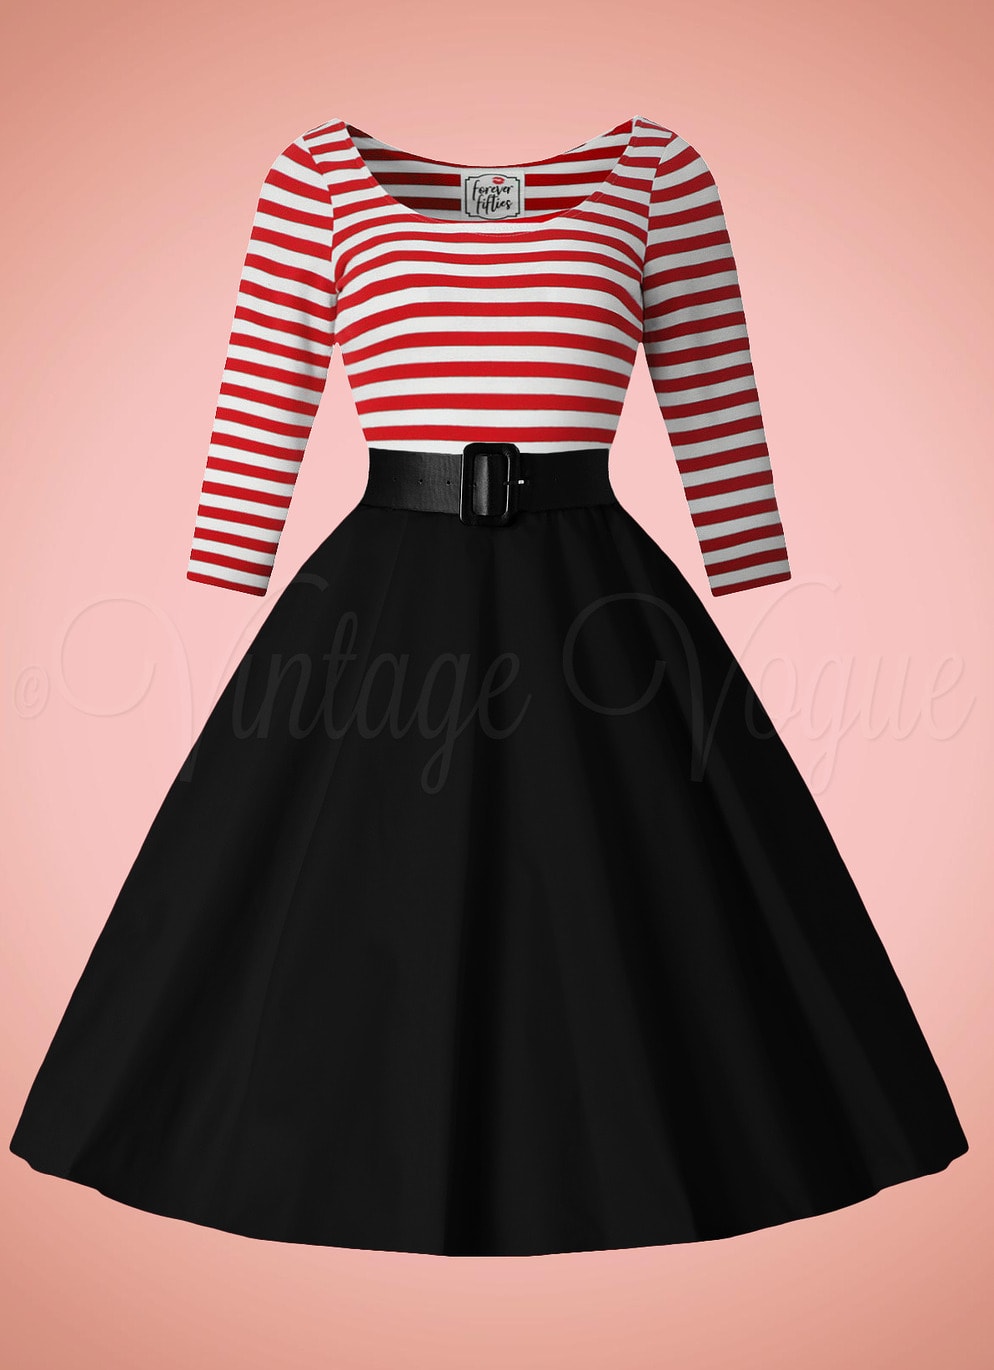 Forever Fifties 50's Retro Rockabilly Swing Kleid Alice Stripes Dress in Rot Weiß & Schwarz 50er Jahre Petticoat Damenkleid Swing Jive Lindy Hop gestreift